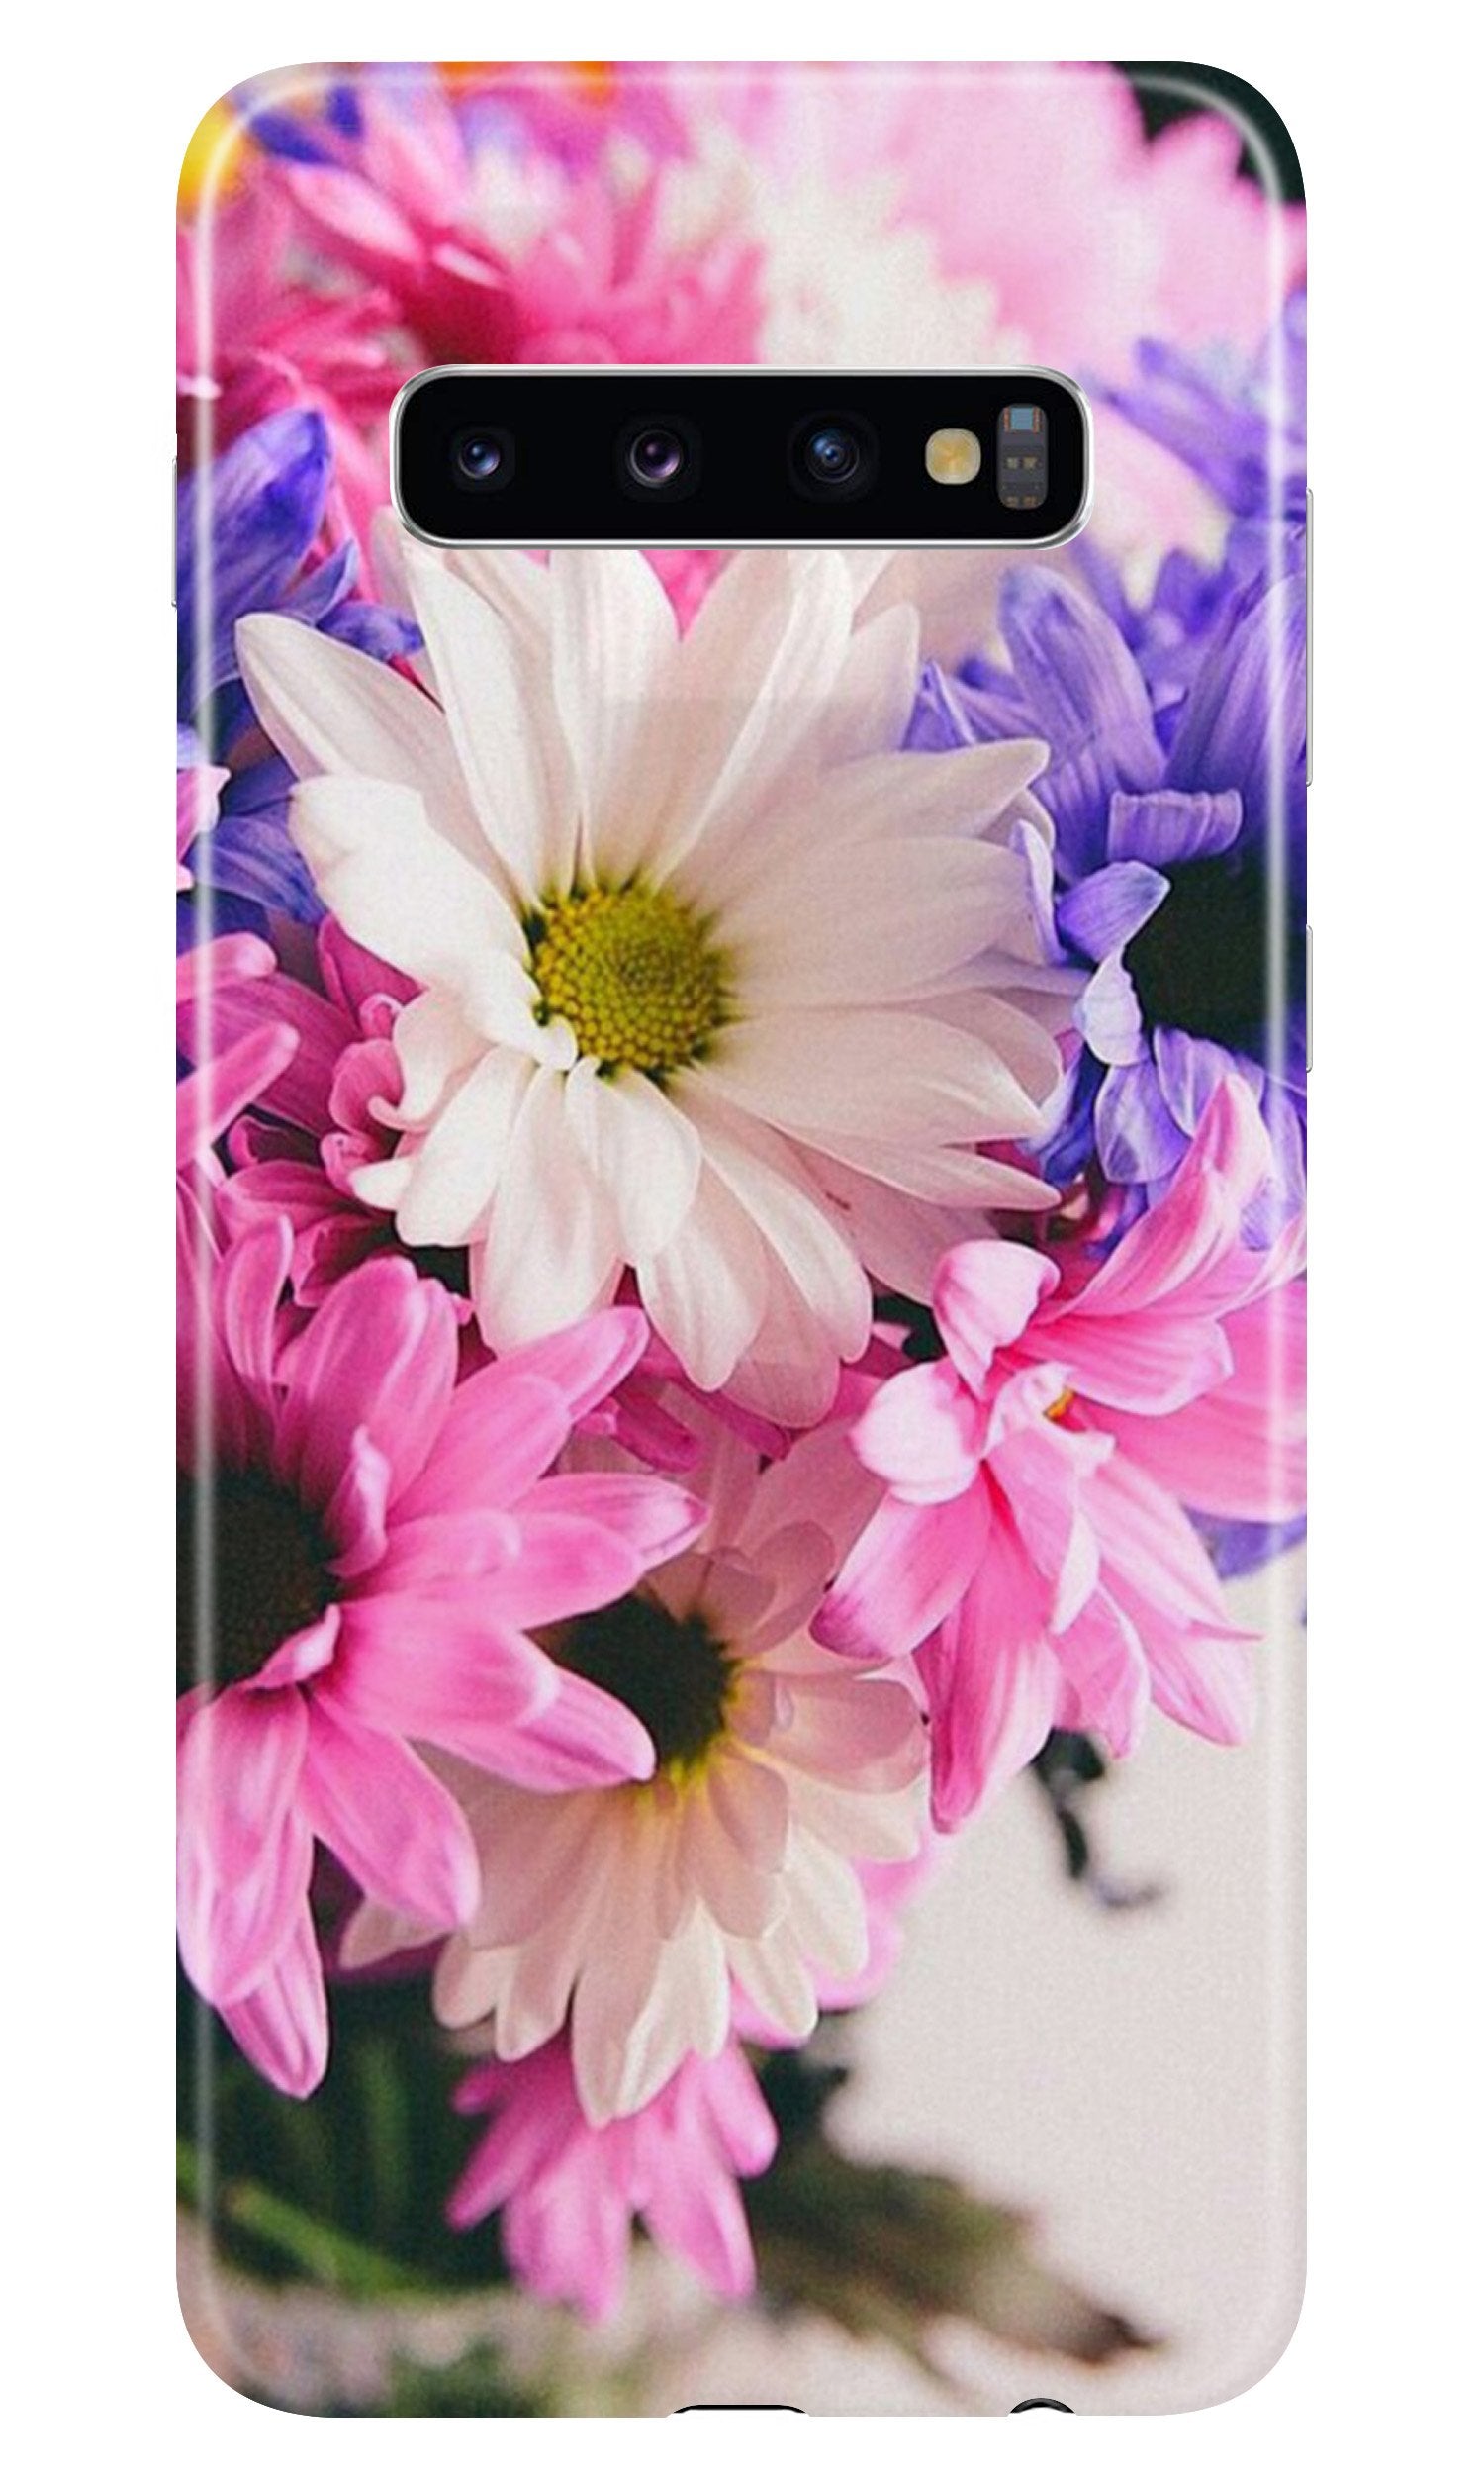 Coloful Daisy Case for Samsung Galaxy S10